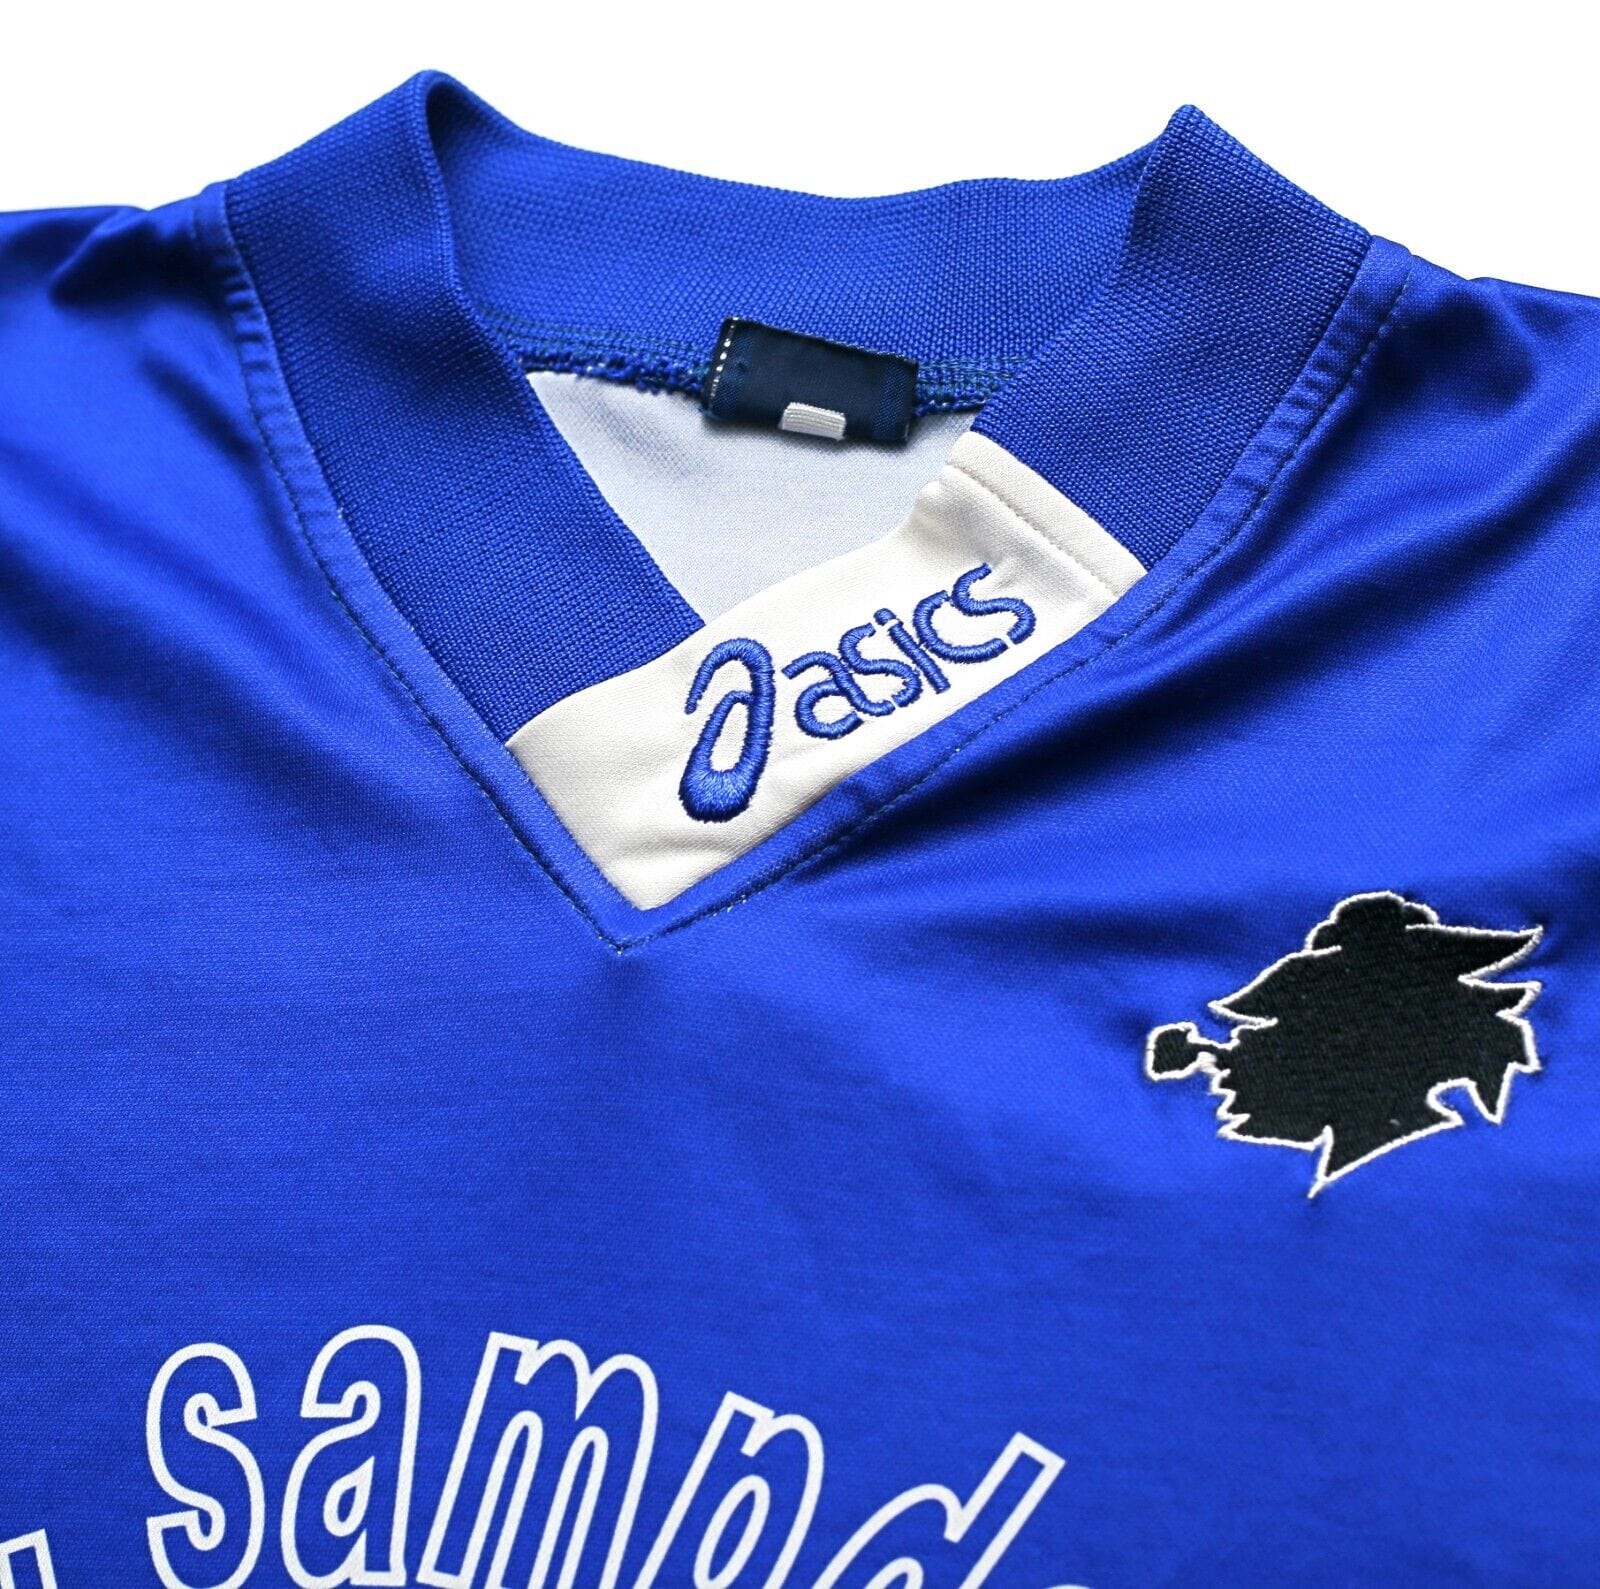 1996/97 SAMPDORIA Vintage Asics Long Sleeve Football Training Shirt Jersey (XL)